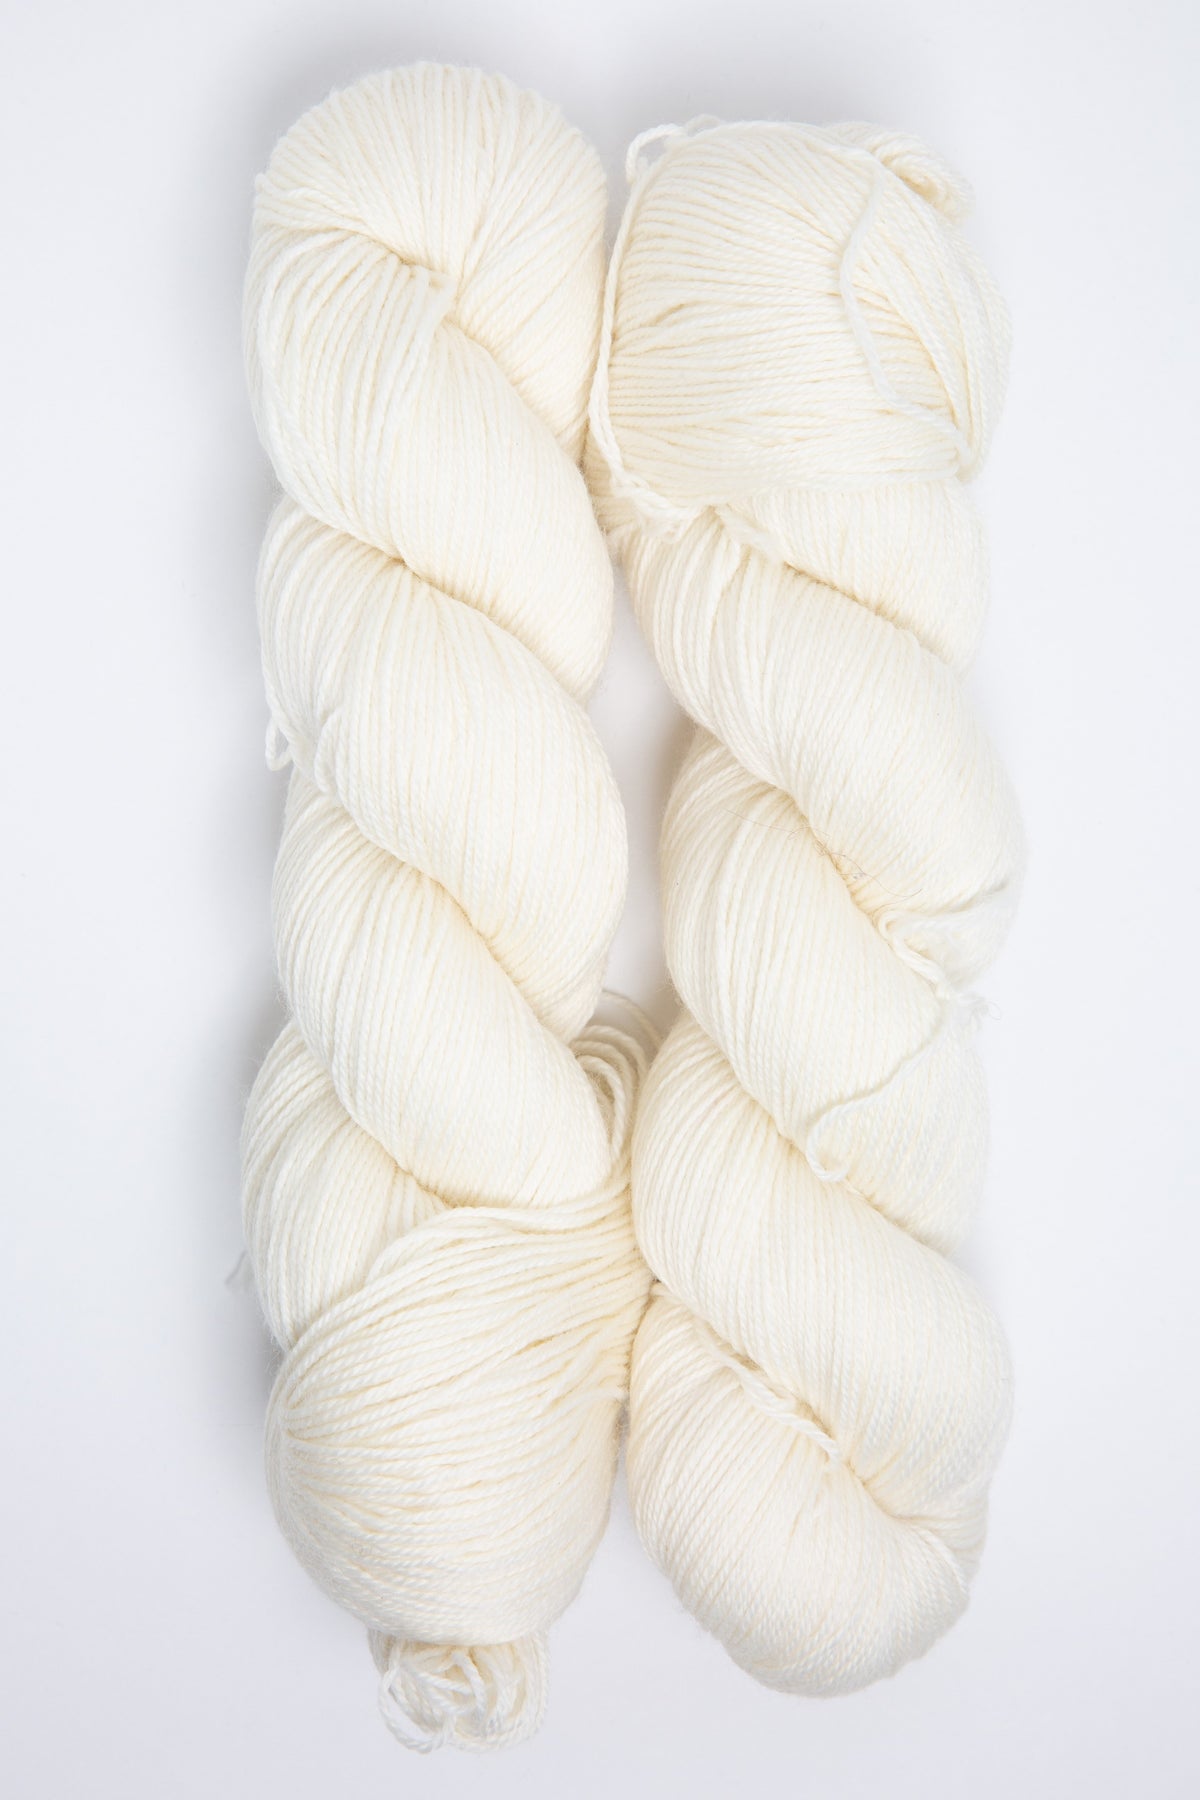 Undyed Yarn (Skeins) - Sock Wool